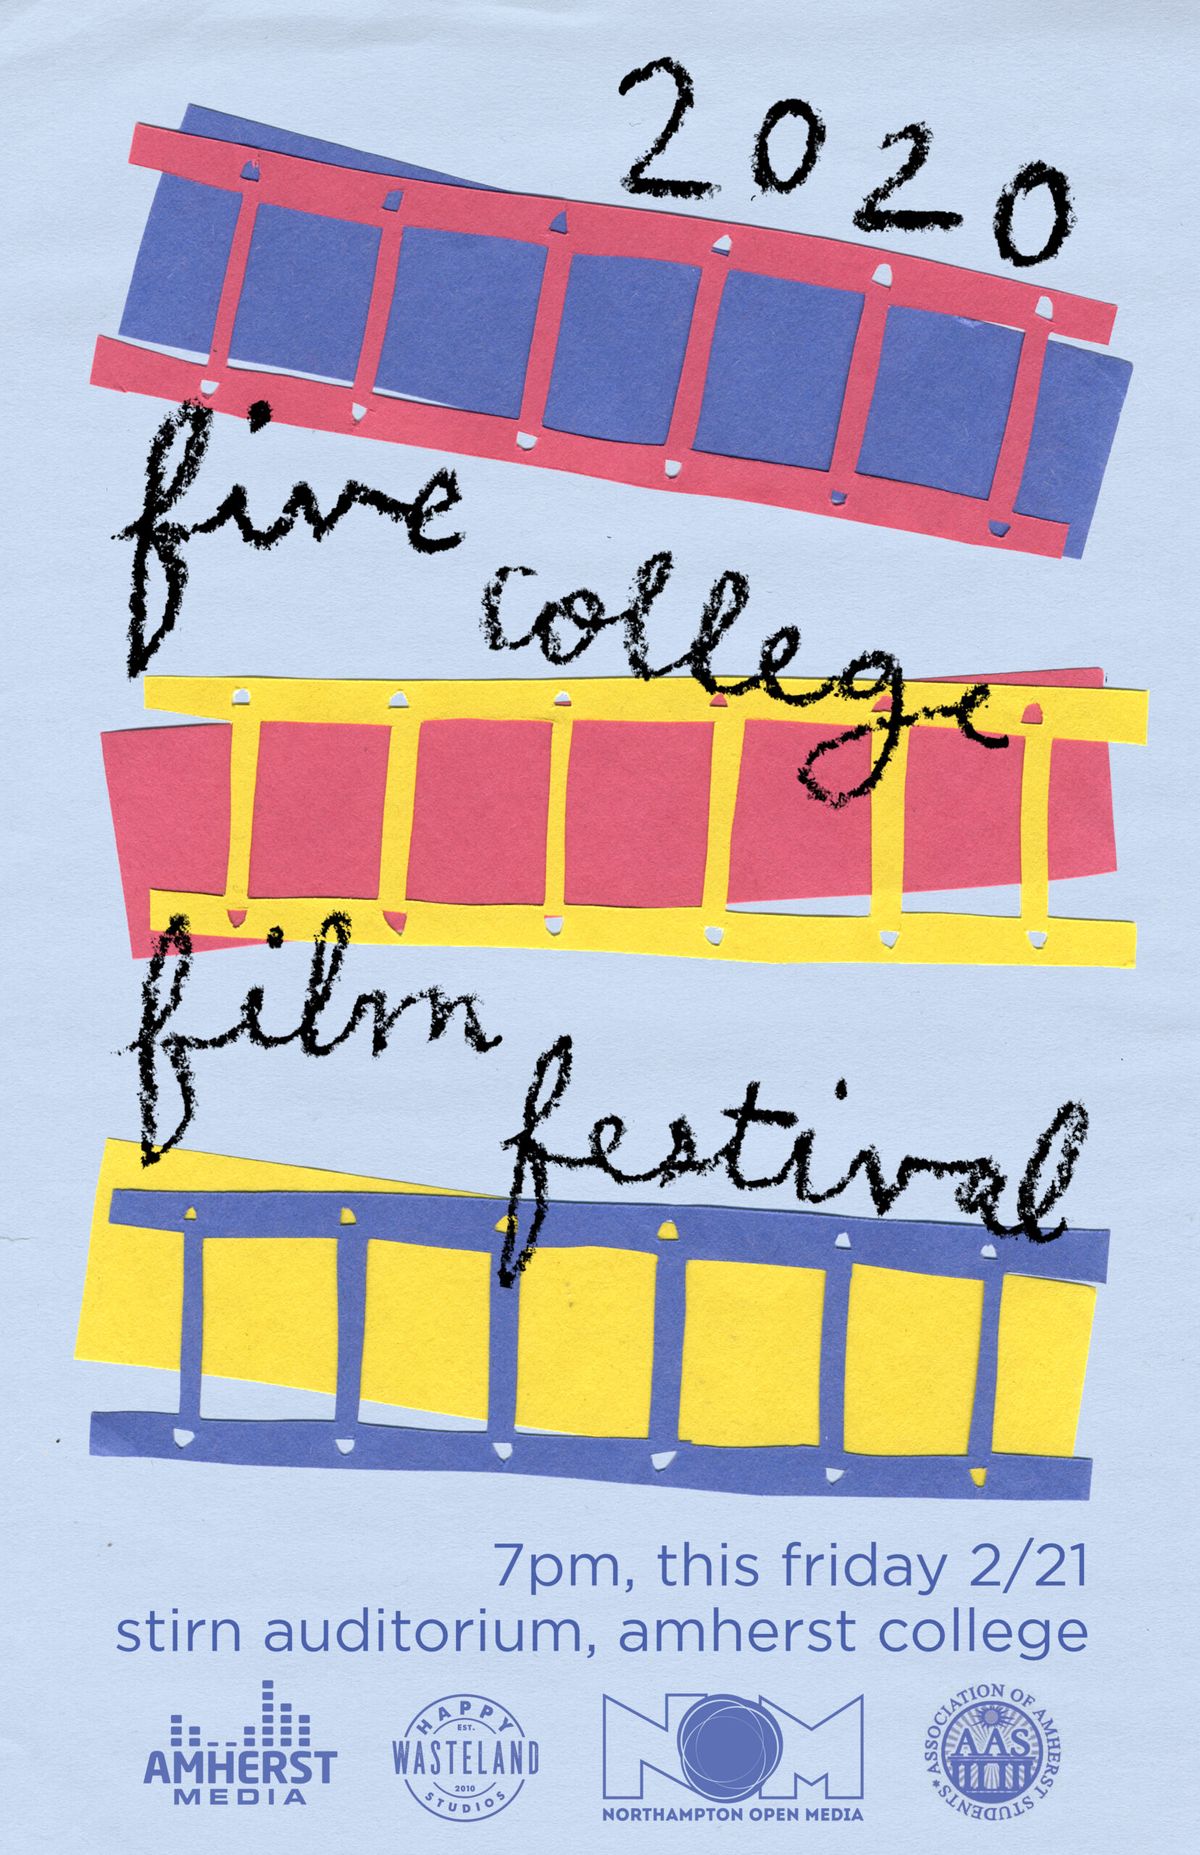 Annual Five College Film Festival Showcases Student Talent